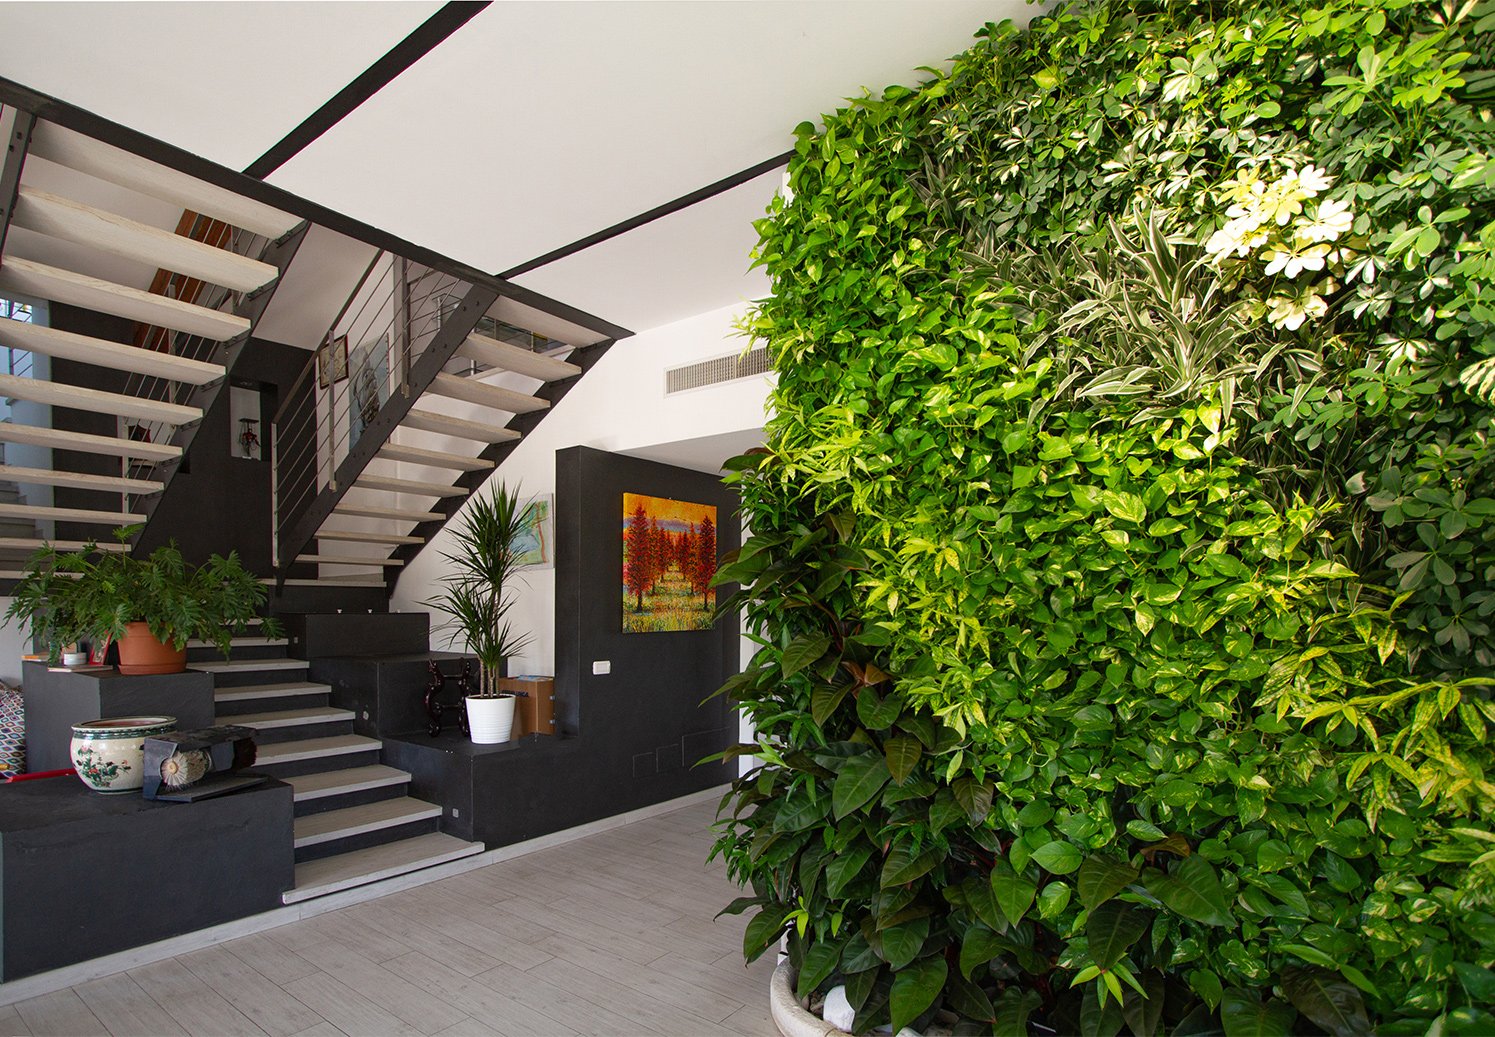 ricciardi-giardino-verticale-parete-verde-sundar-italia-016.jpg